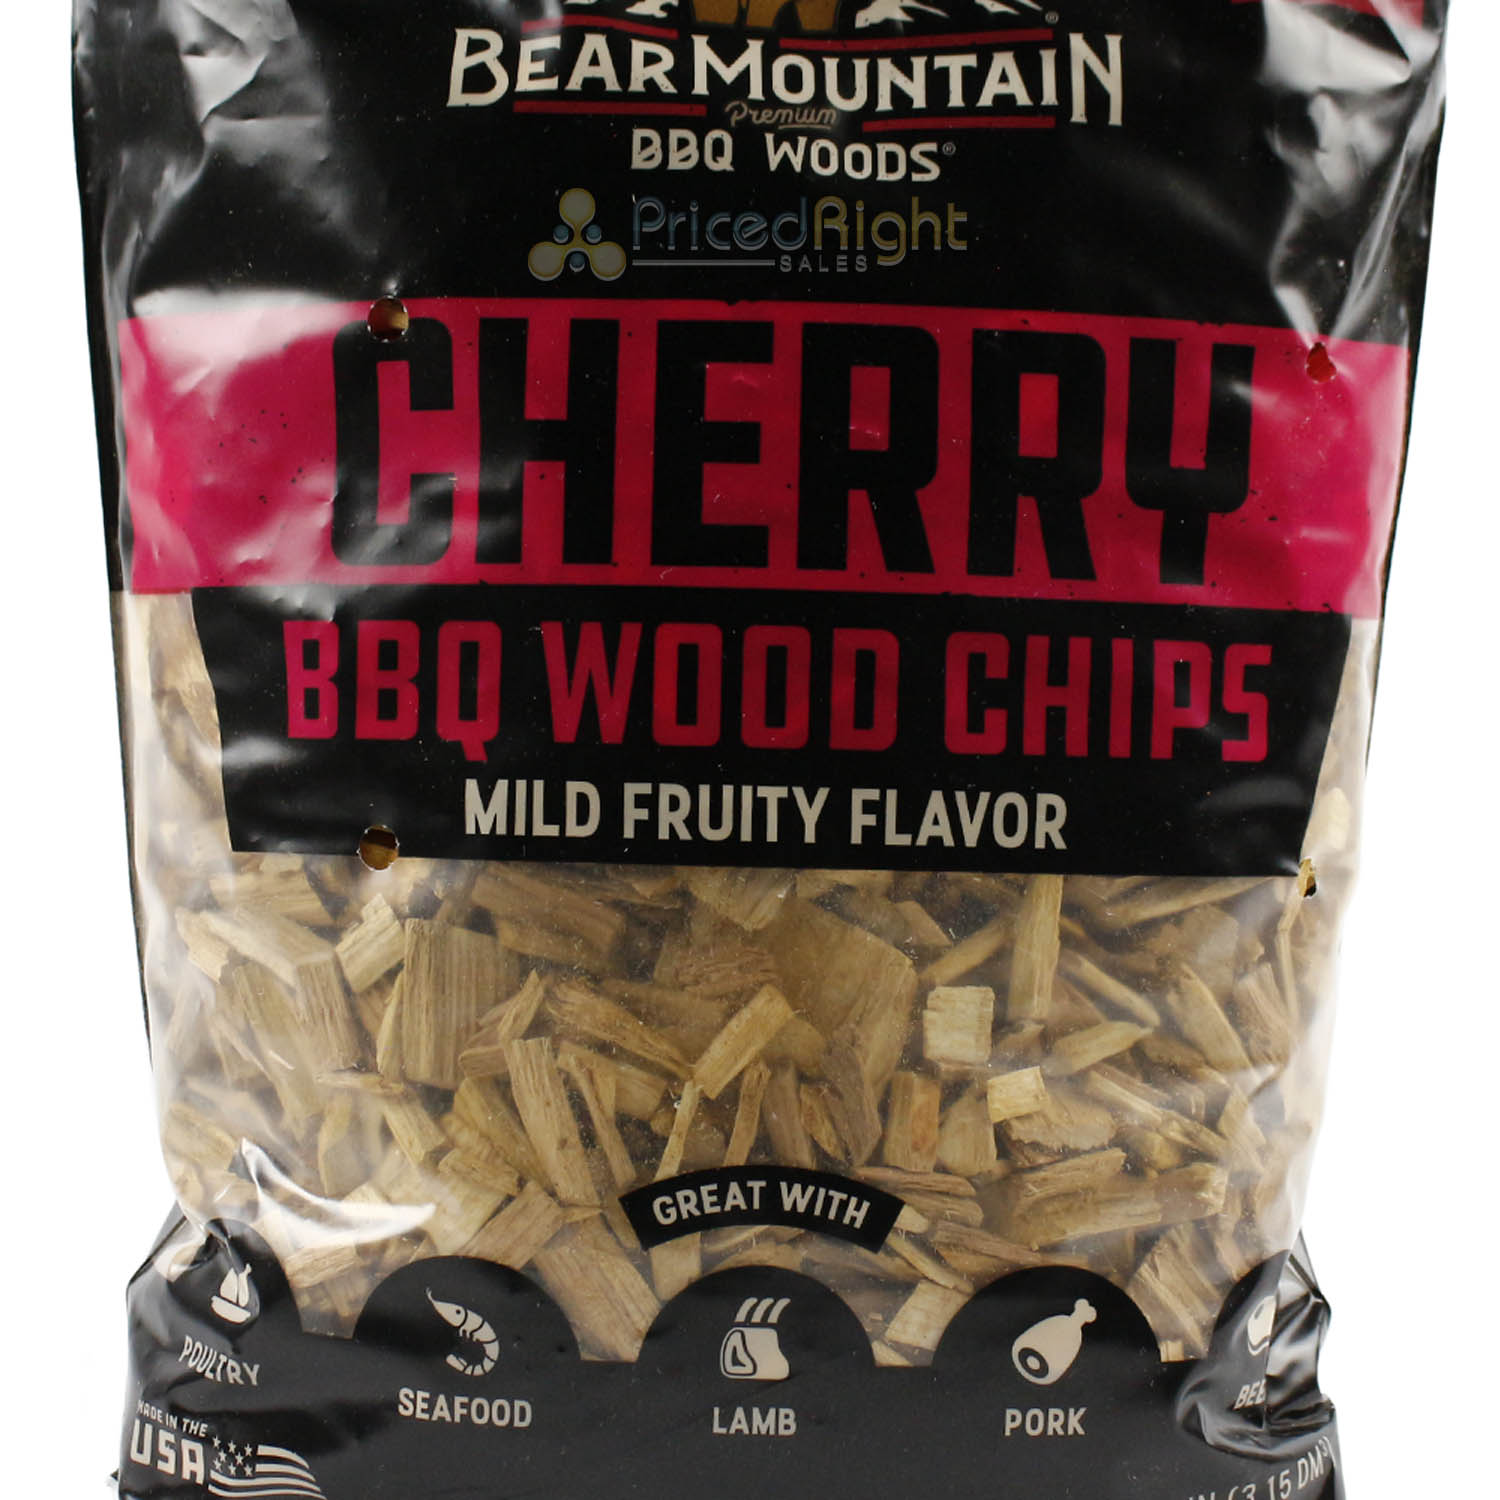 Bear Mountain BBQ Cherry All Natural Hardwood Chips Mild Fruity Smoky Flavor